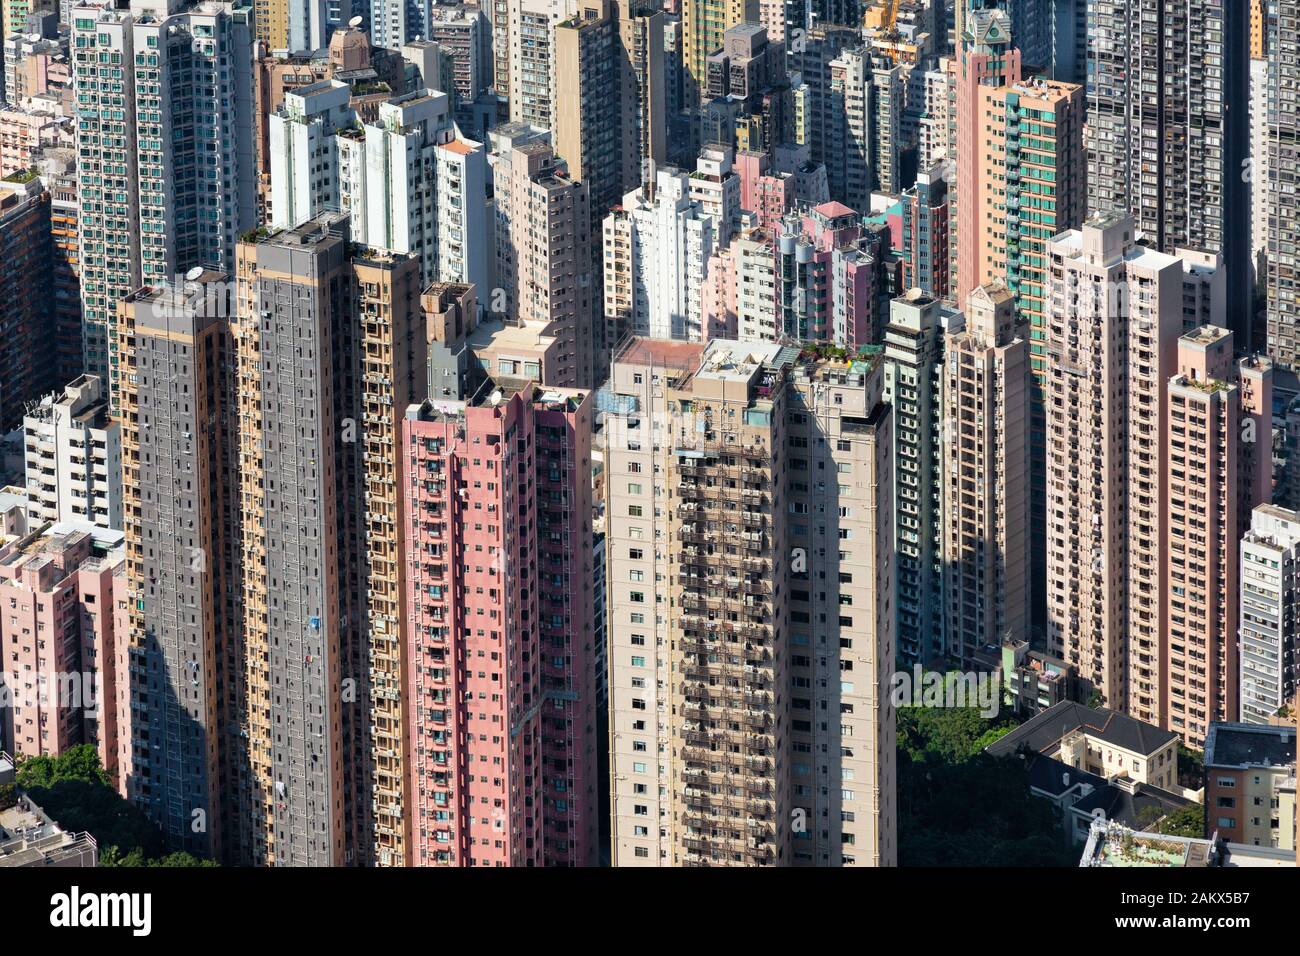 Skyscrapers Hong Kong Island - Residential accommodation in high rise buildings, Hong Kong Island, Hong Kong Asia Stock Photo